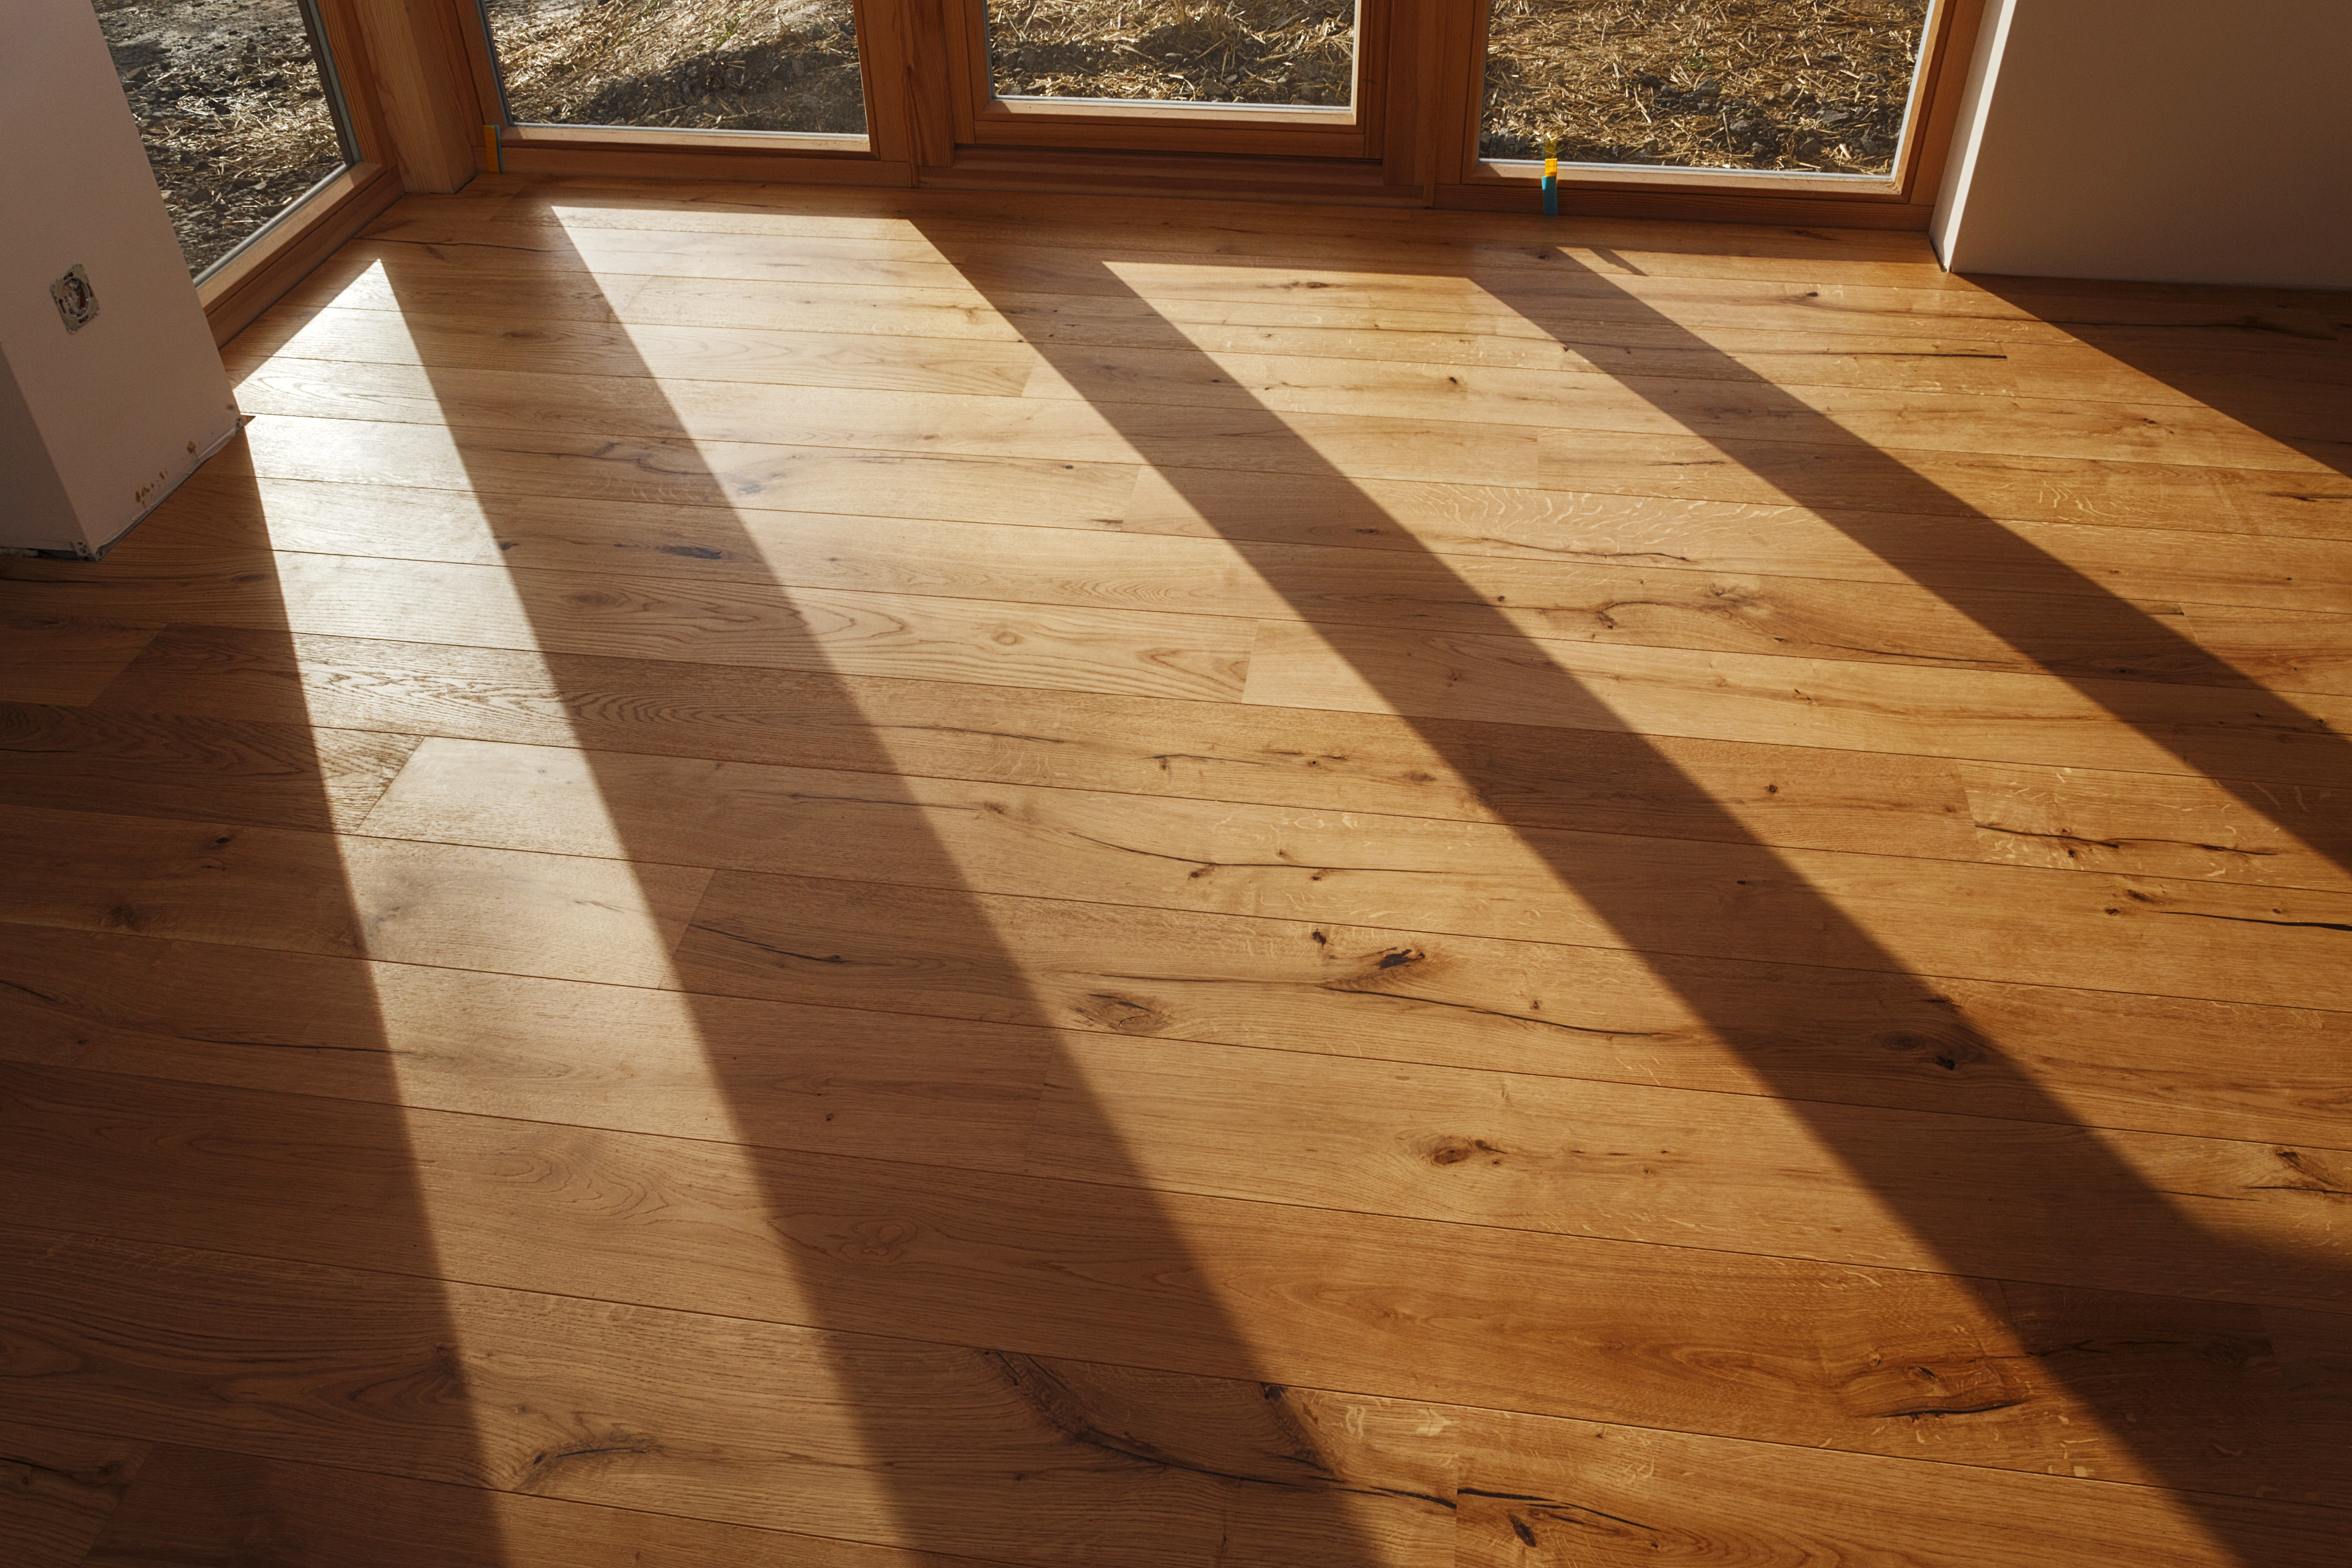 Wood Flooring Hardwood Versus, Which Brand Of Hardwood Flooring Is Best